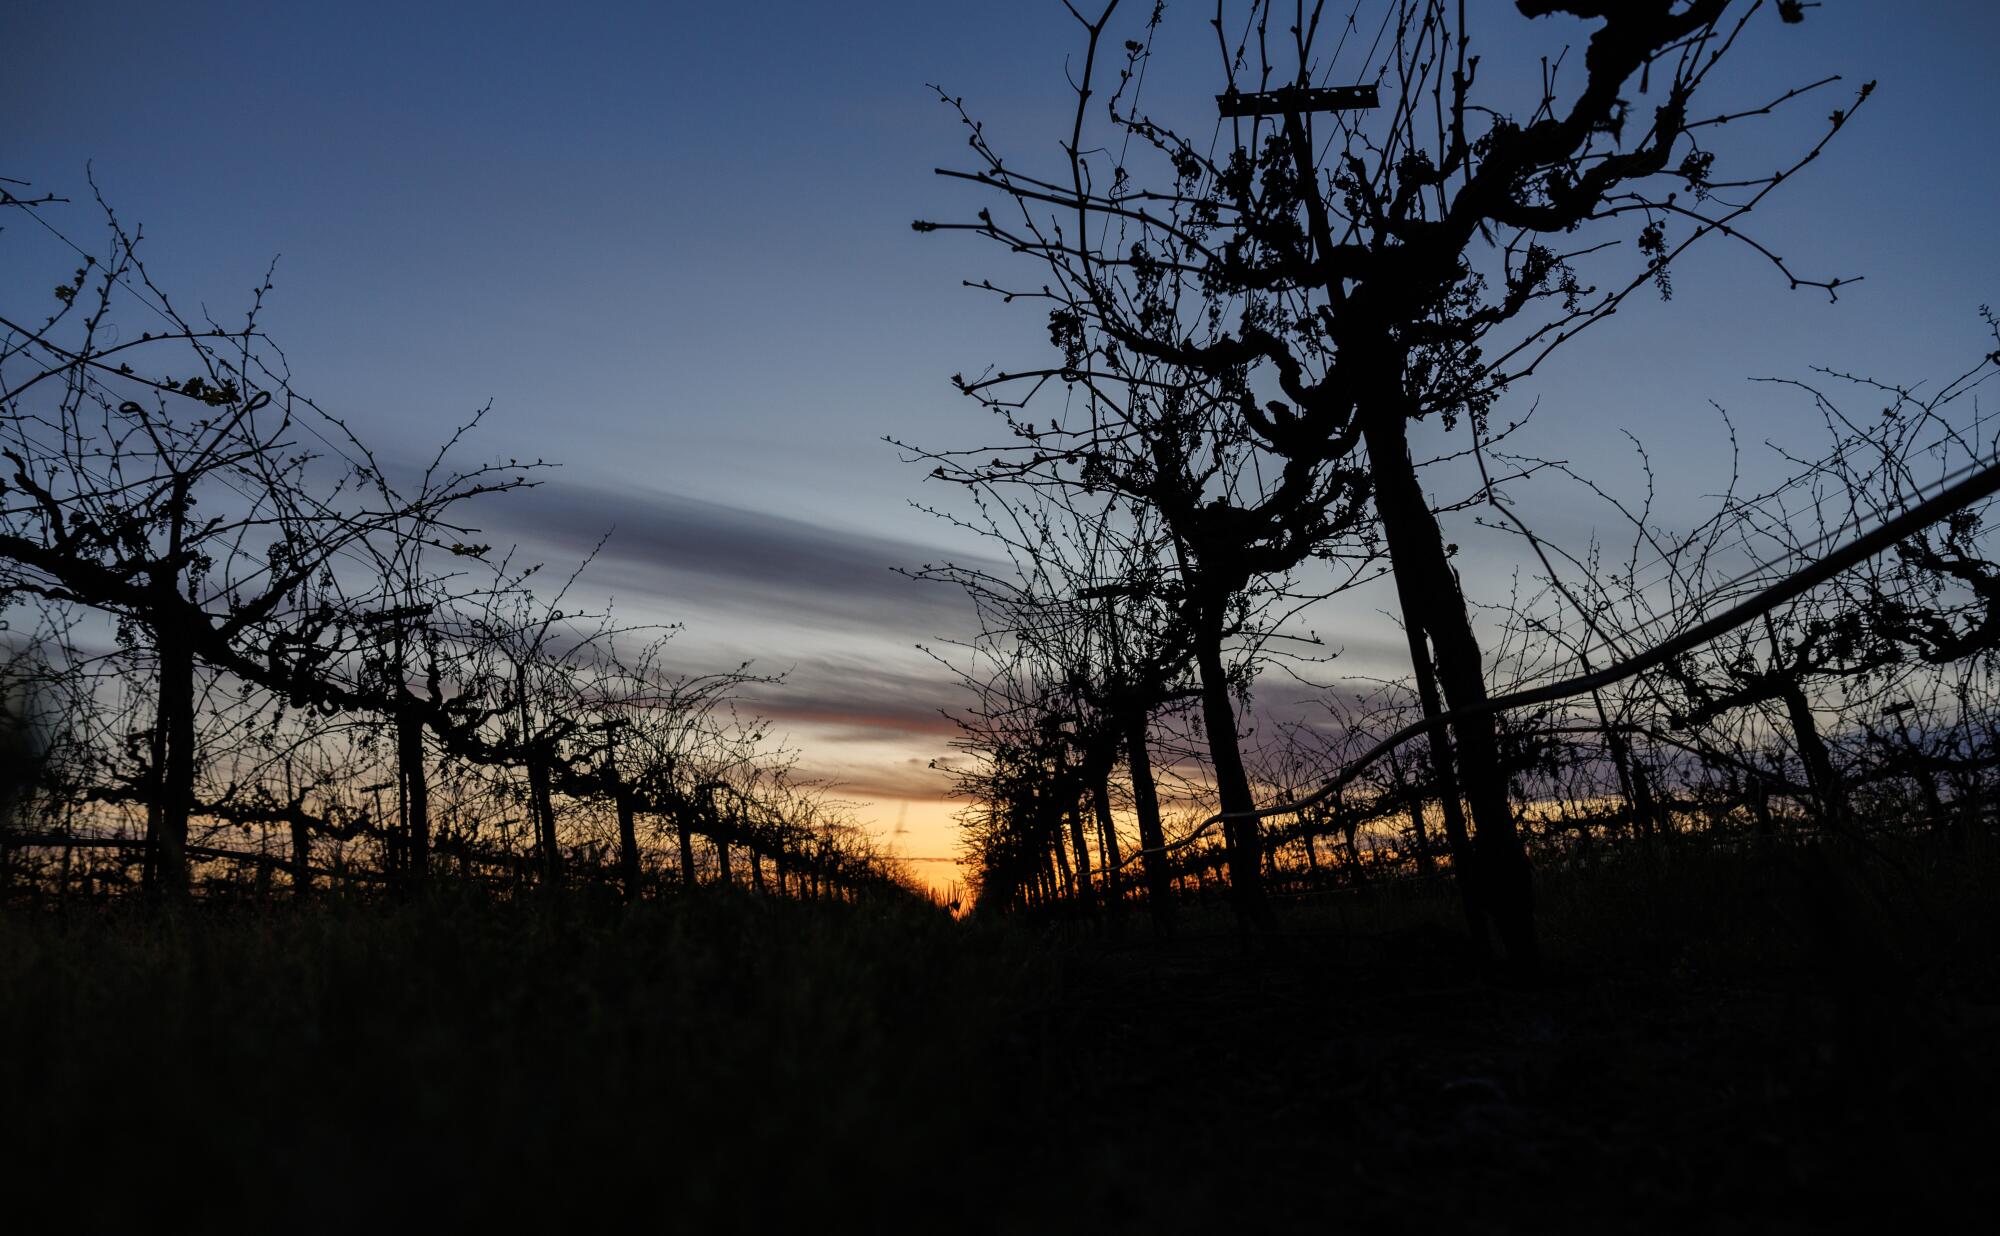 Shriveled grapevines against an evening sky.